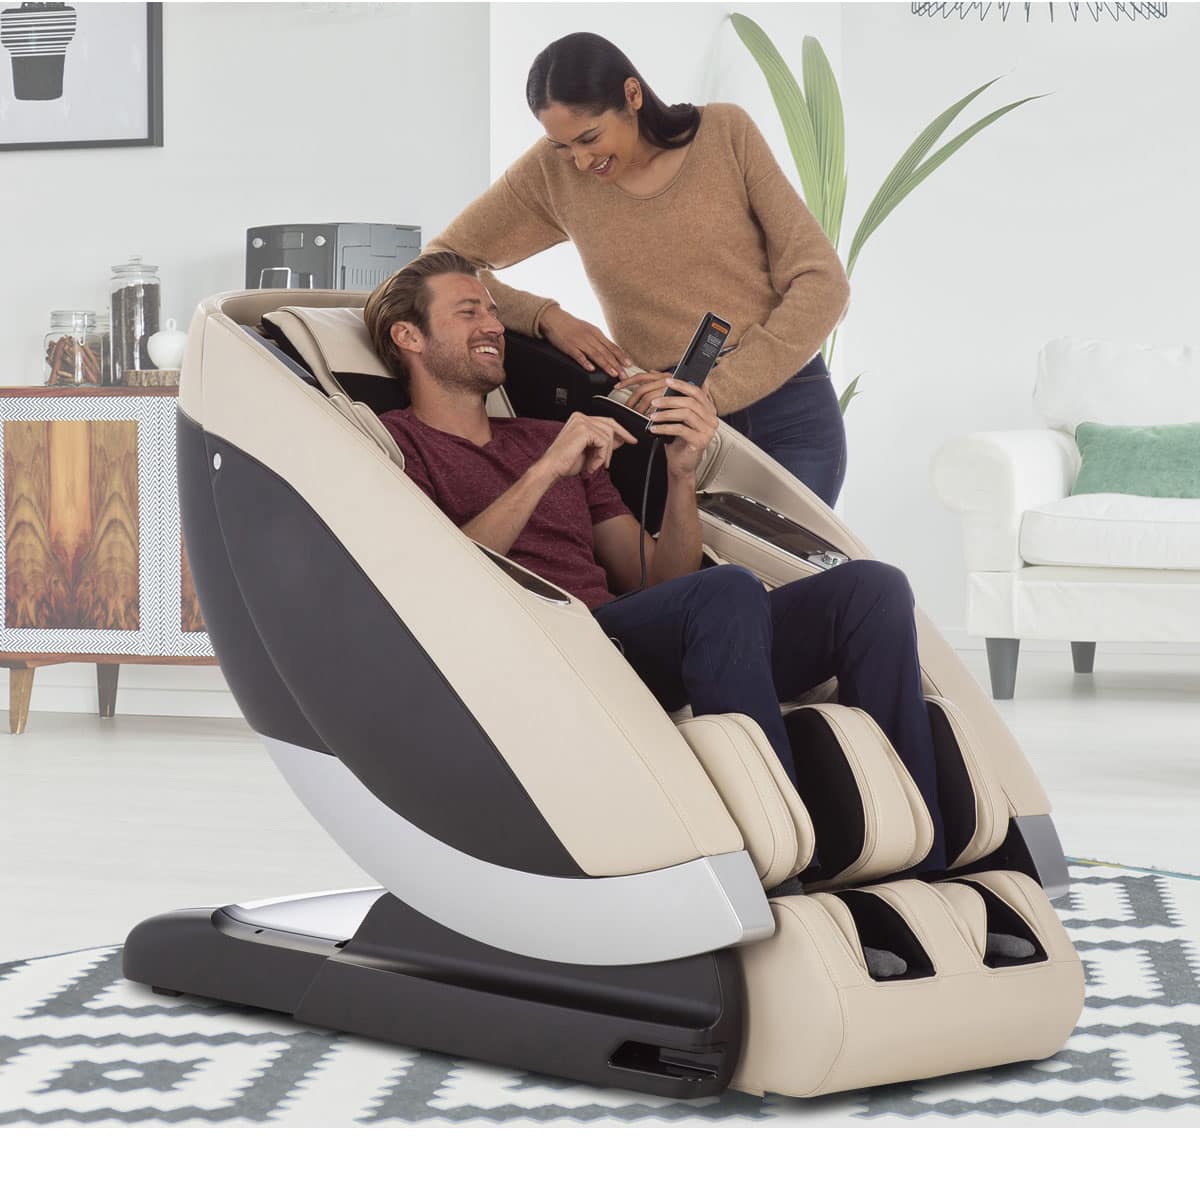 Human Touch Super Novo Massage Chair